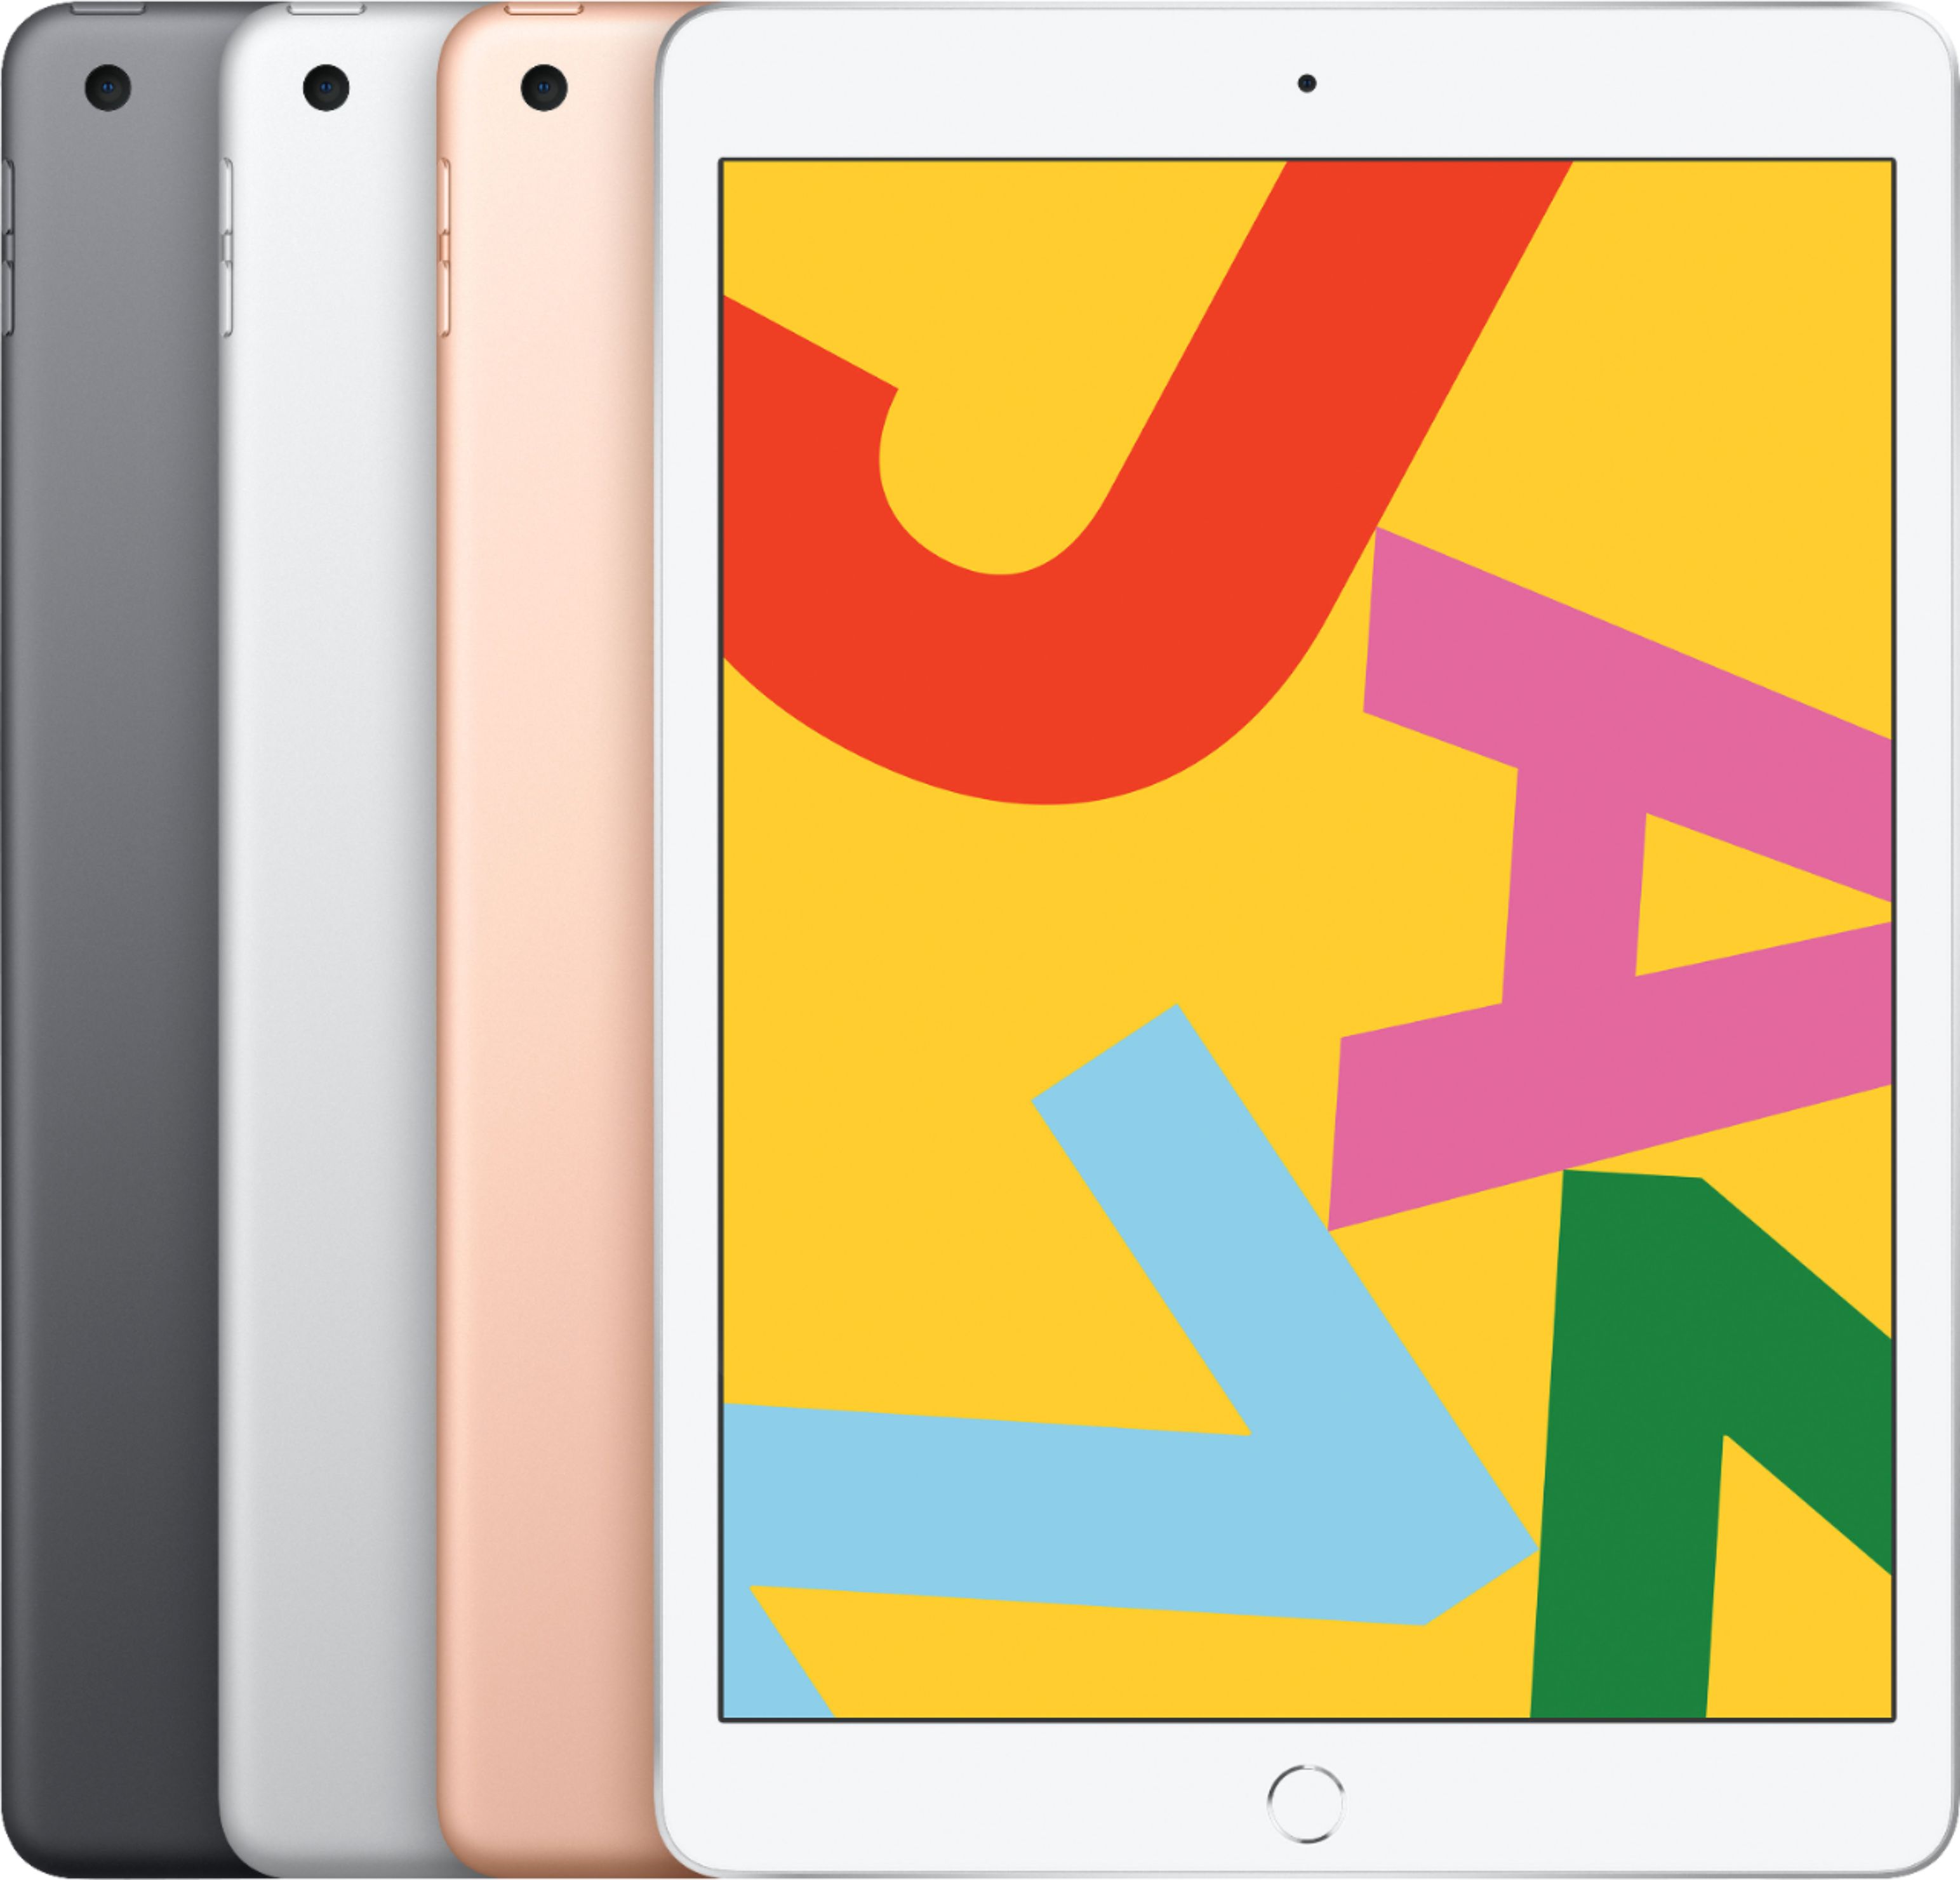 Apple 10.2-Inch iPad Latest Model (7th Generation) with Wi-Fi 32GB Gold MW762LL/A - Buy